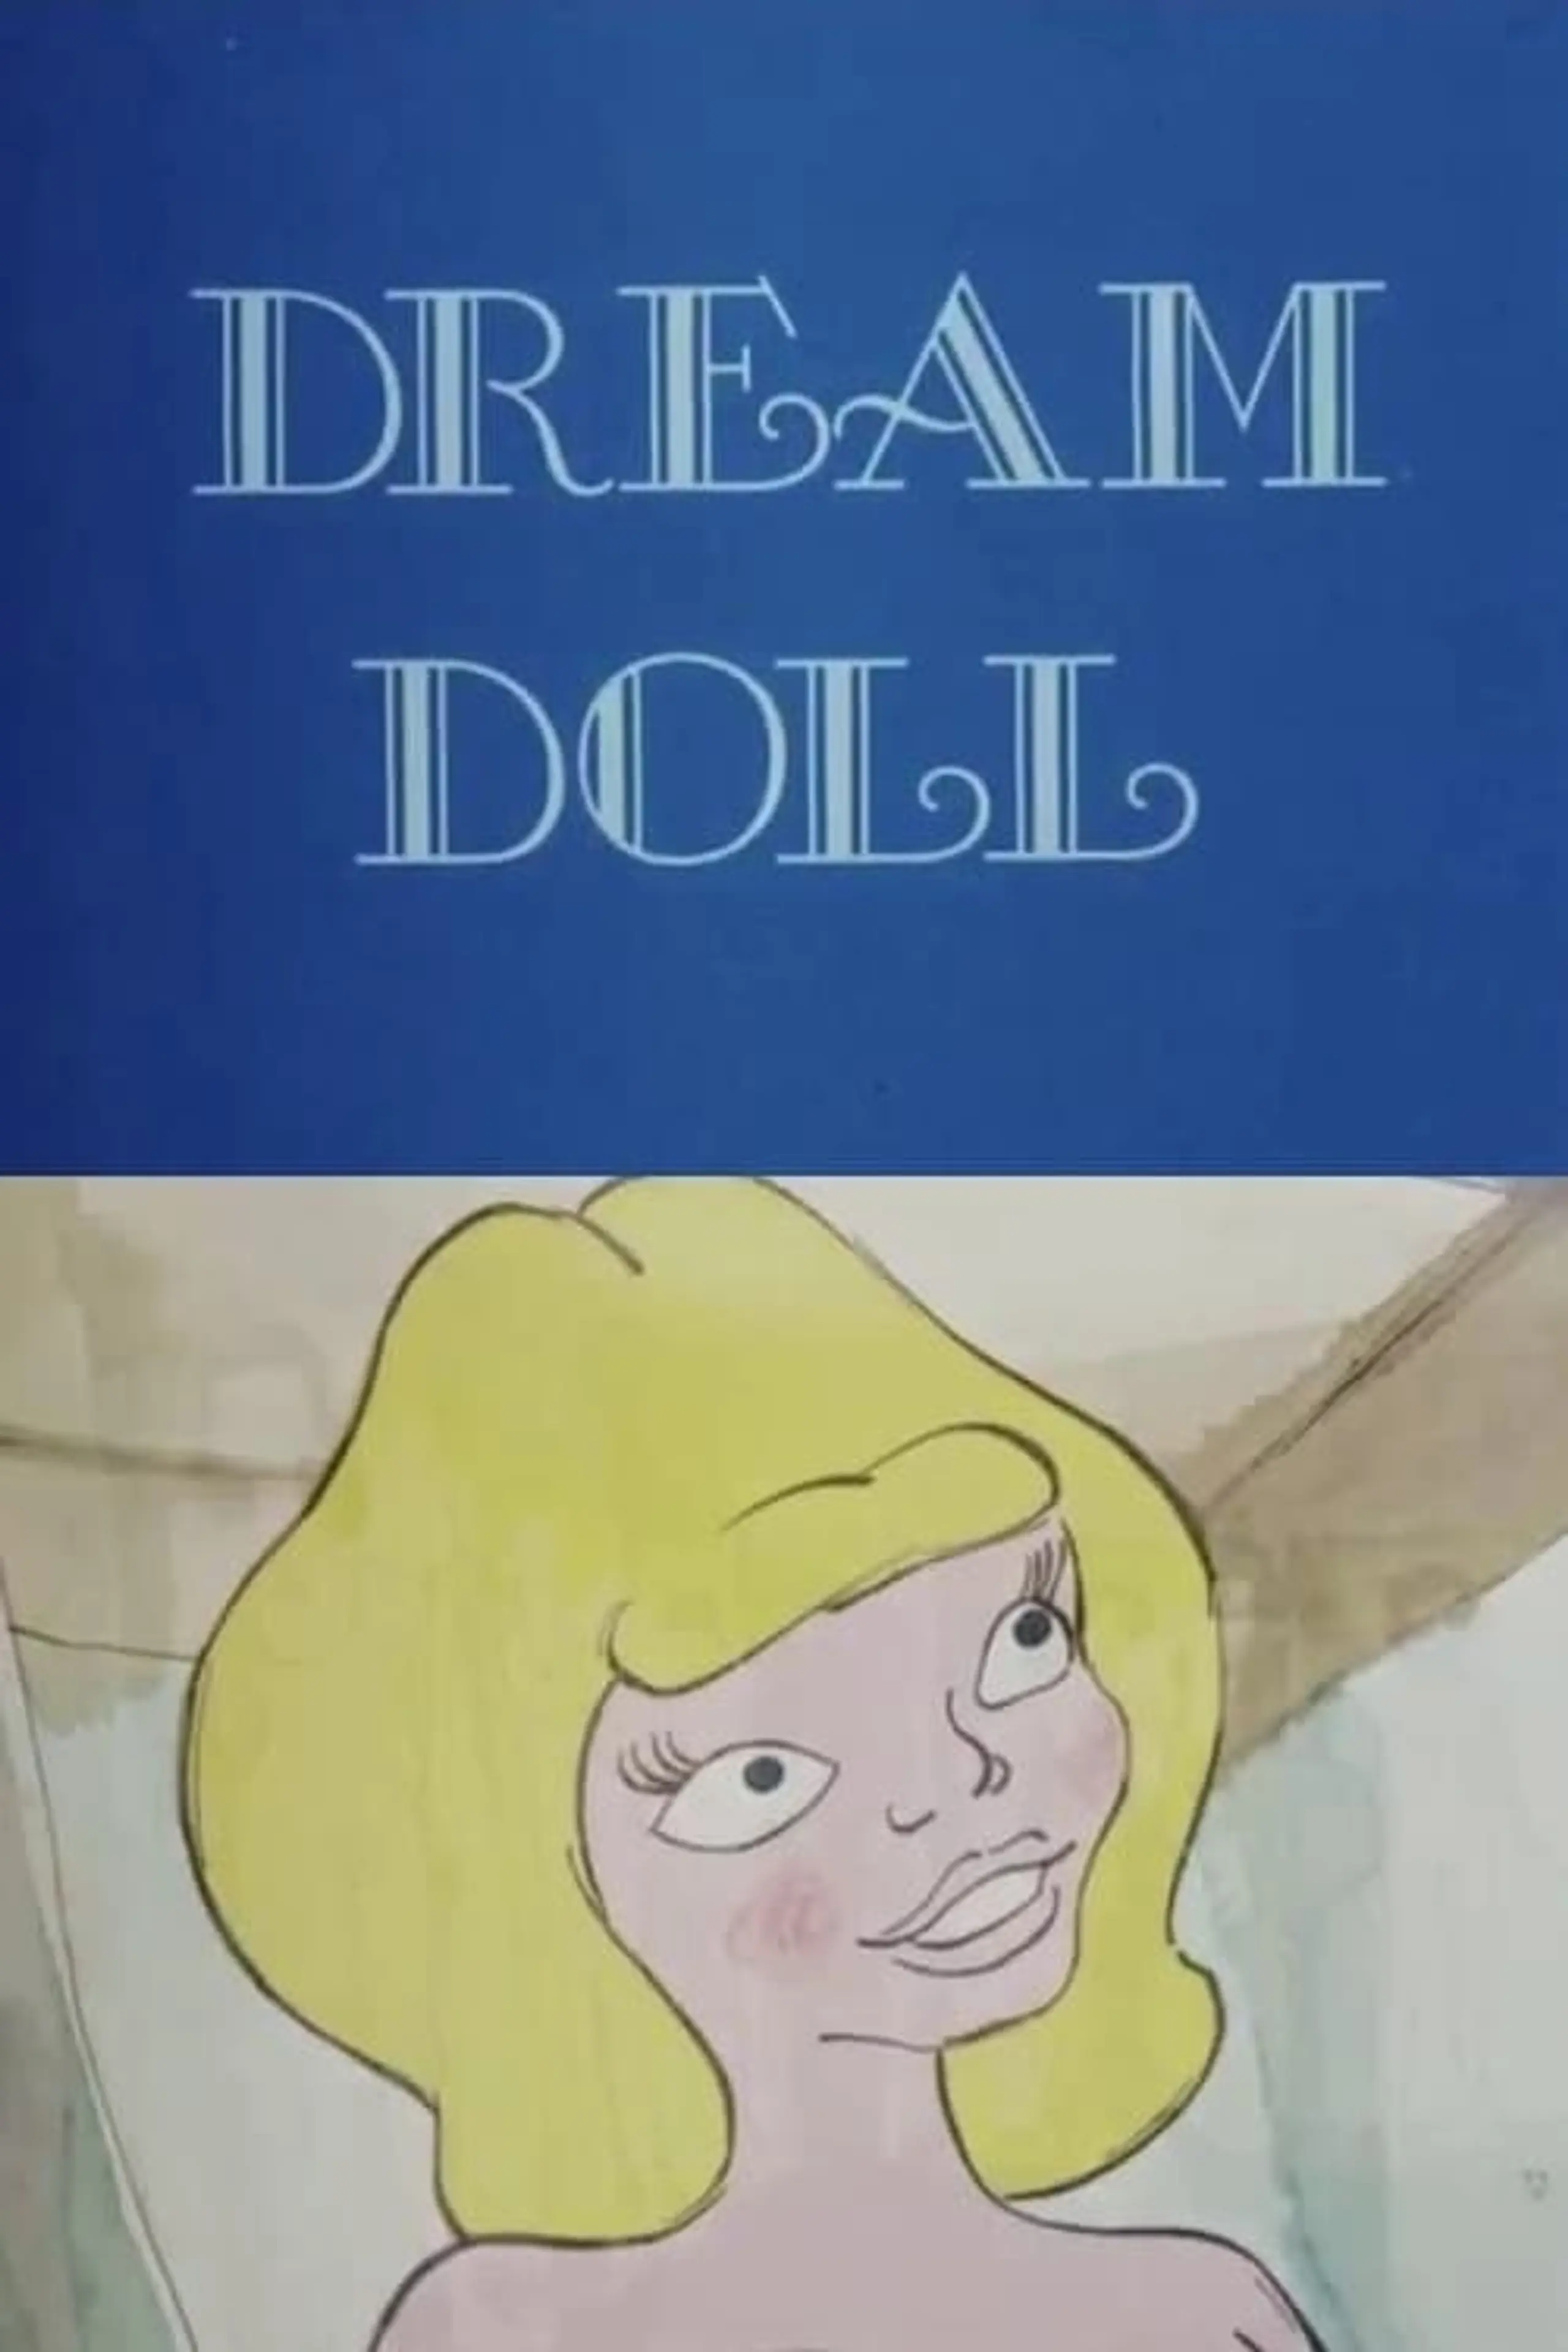 Dream Doll